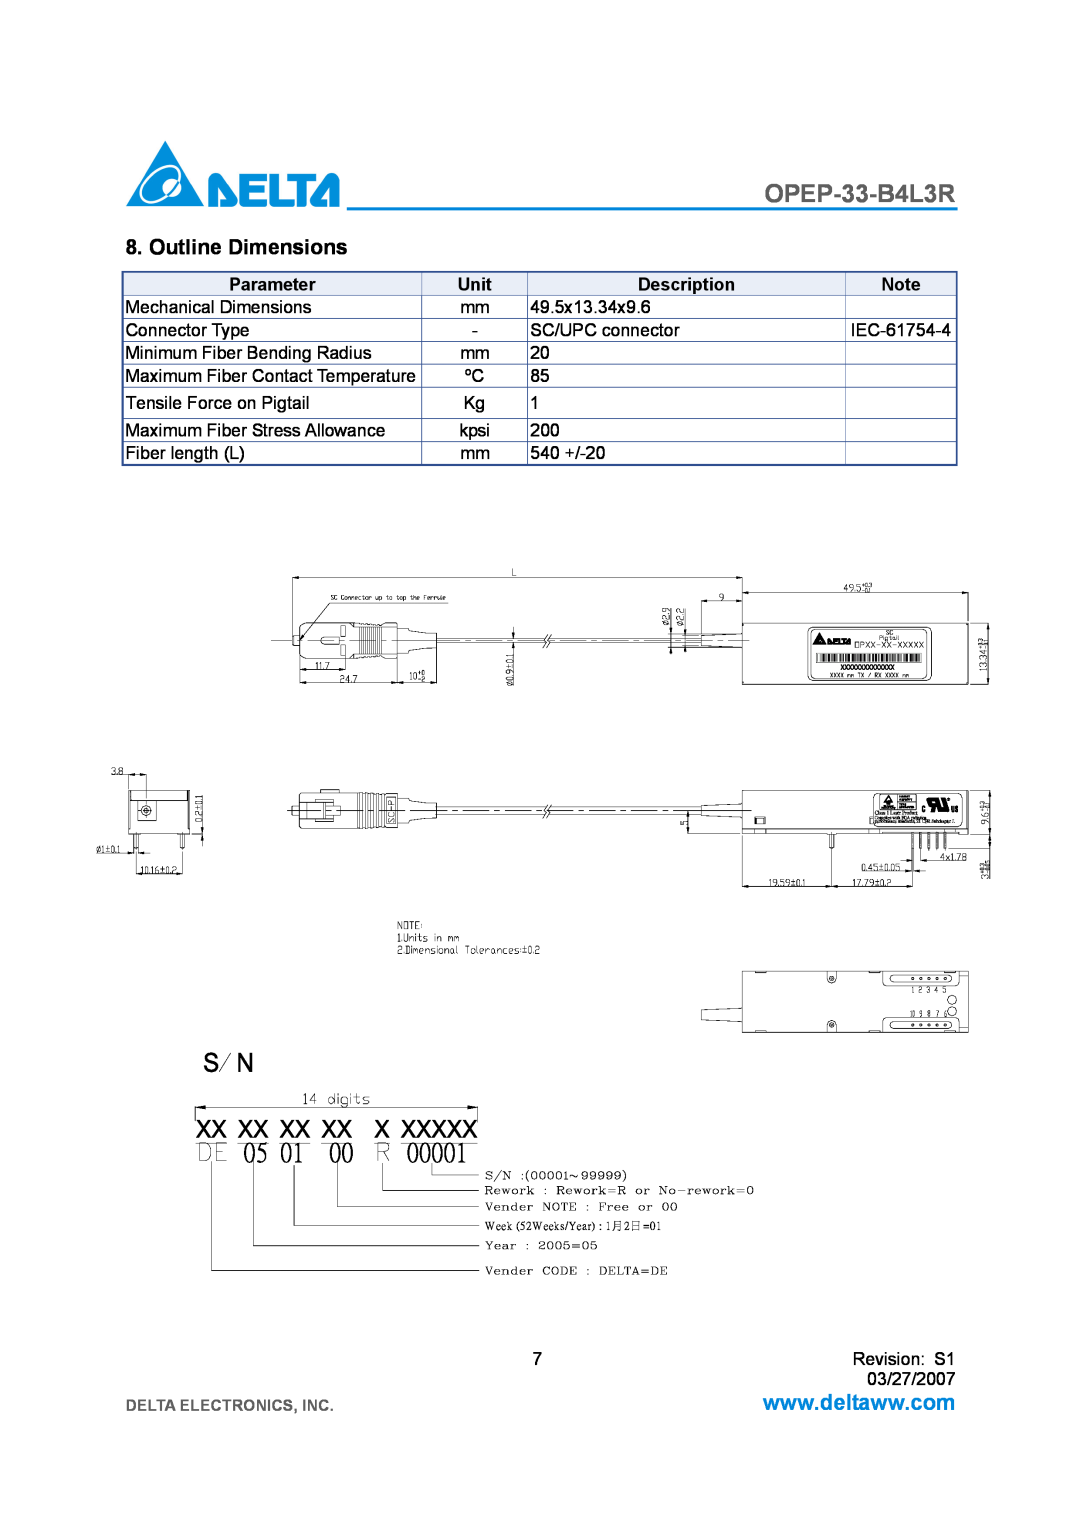 Delta Electronics OPEP-33-B4L3R manual Outline Dimensions, kpsi 